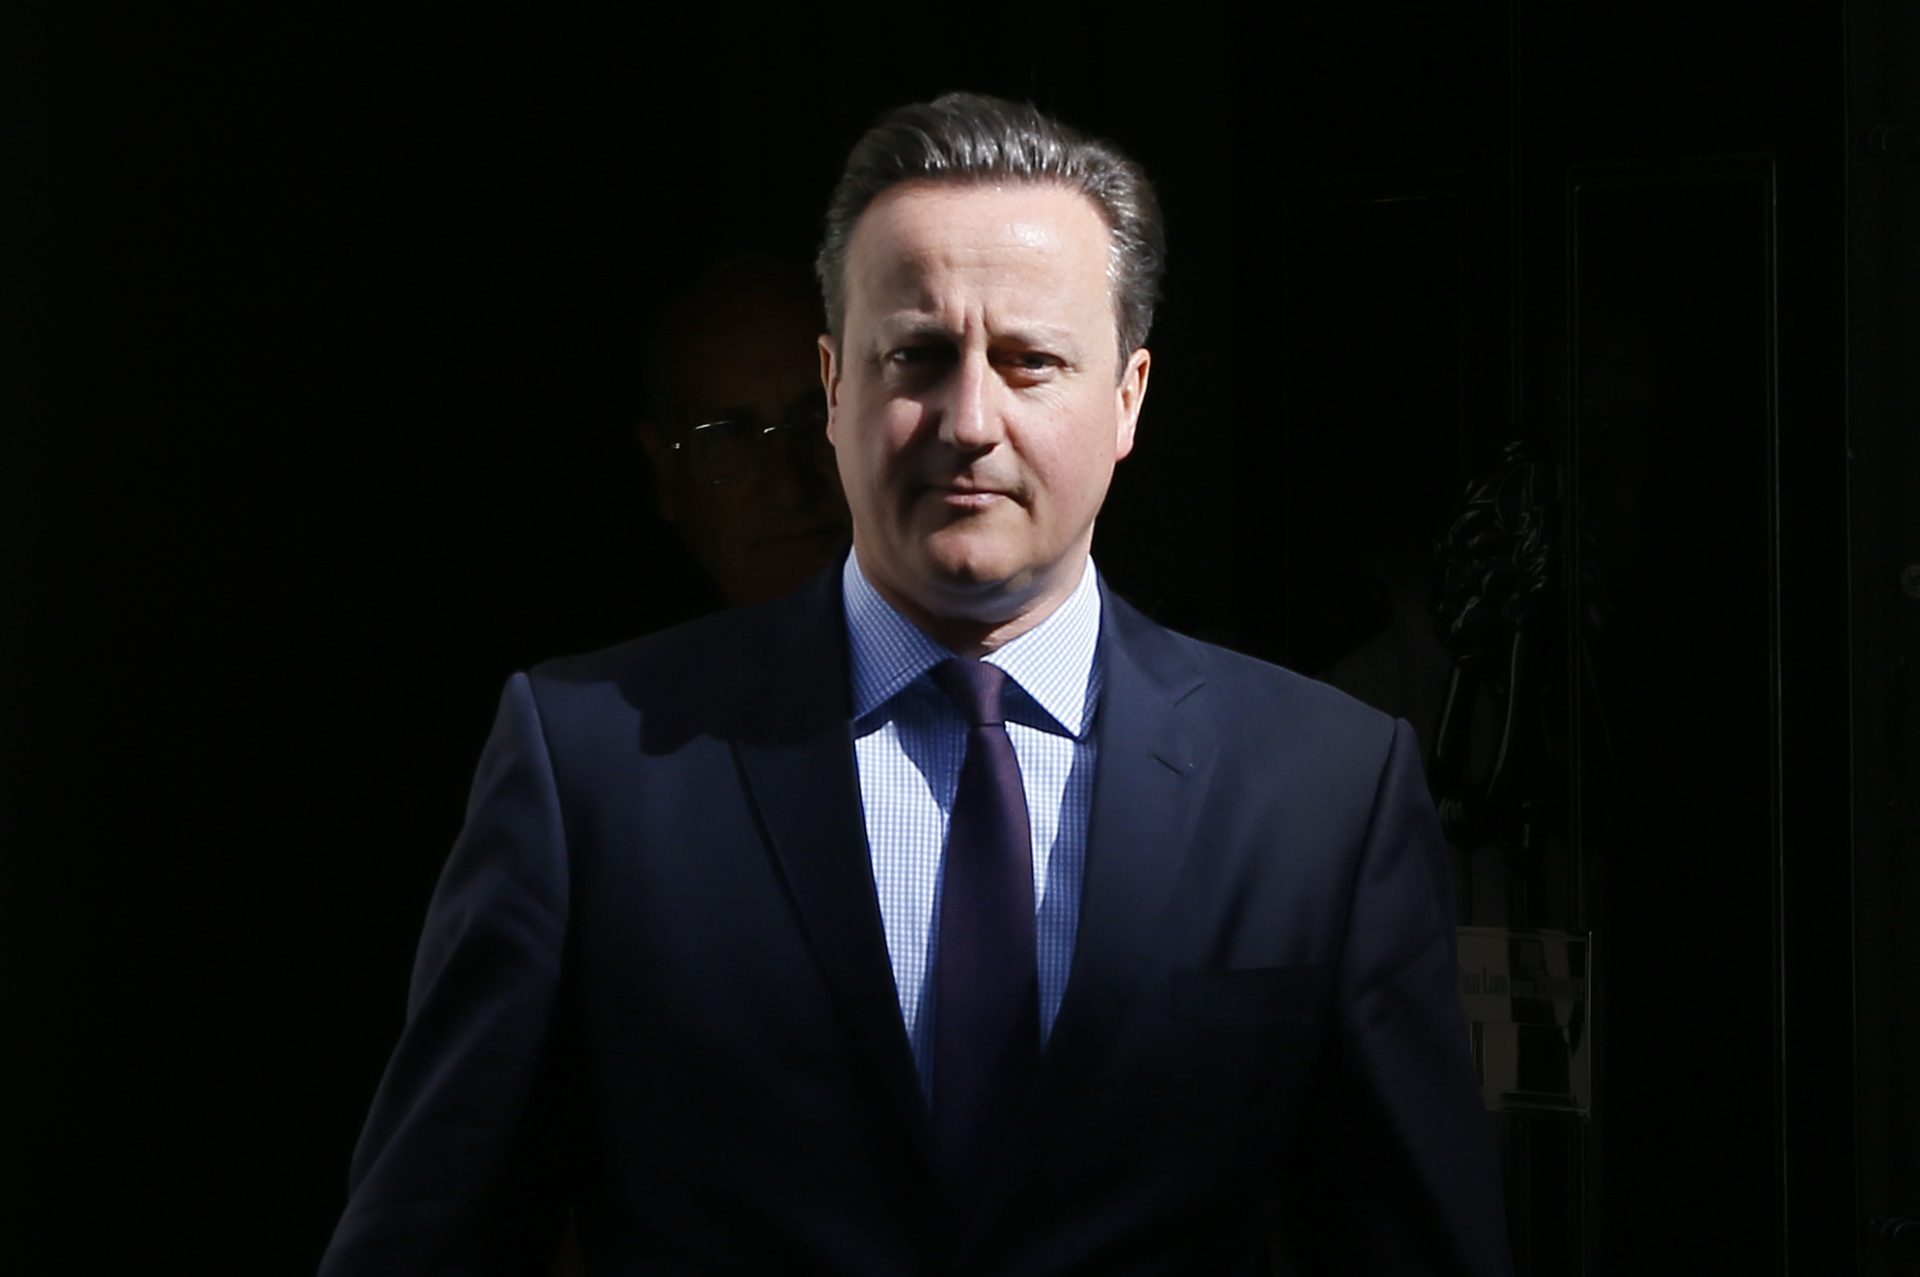 Brexit: David Cameron demite-se depois de perder referendo